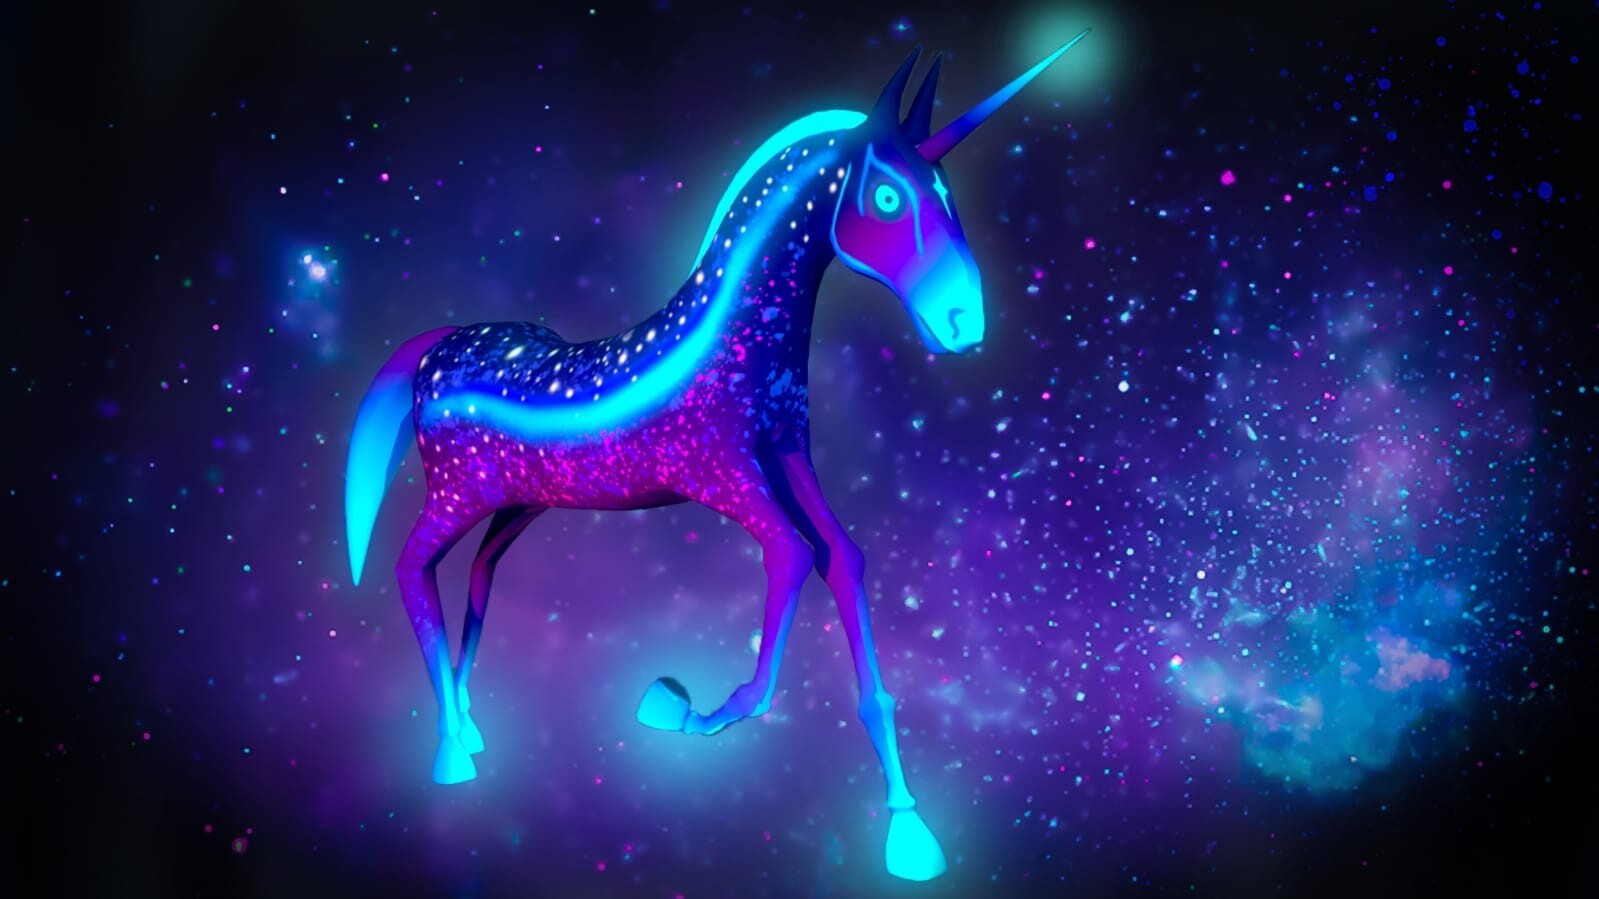 ArtStation - Star's unicorn